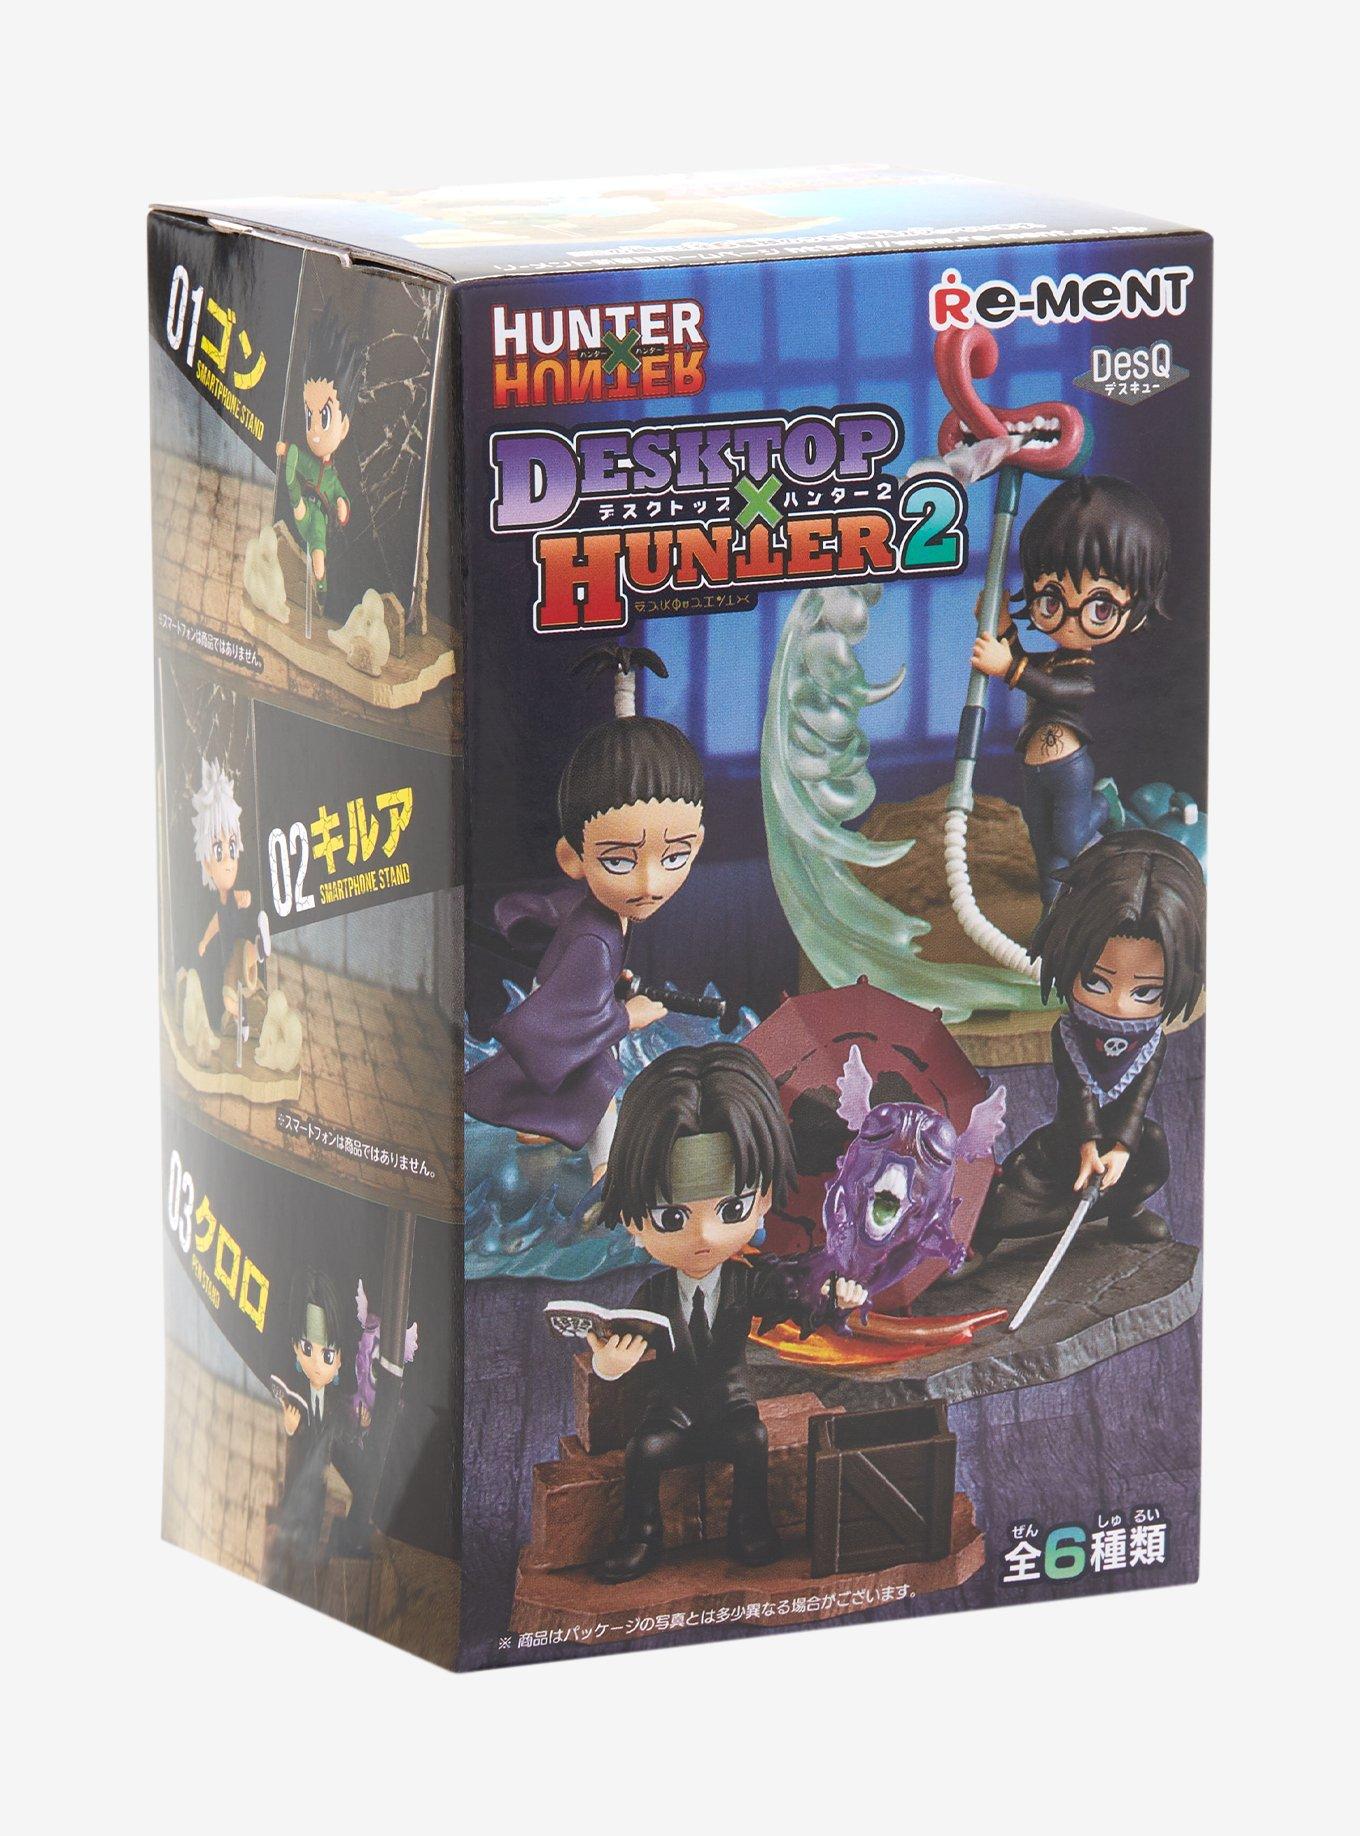 Hunter x Hunter DesQ Desktop Hunter Vol.2 Boxed Set of 6 Figures